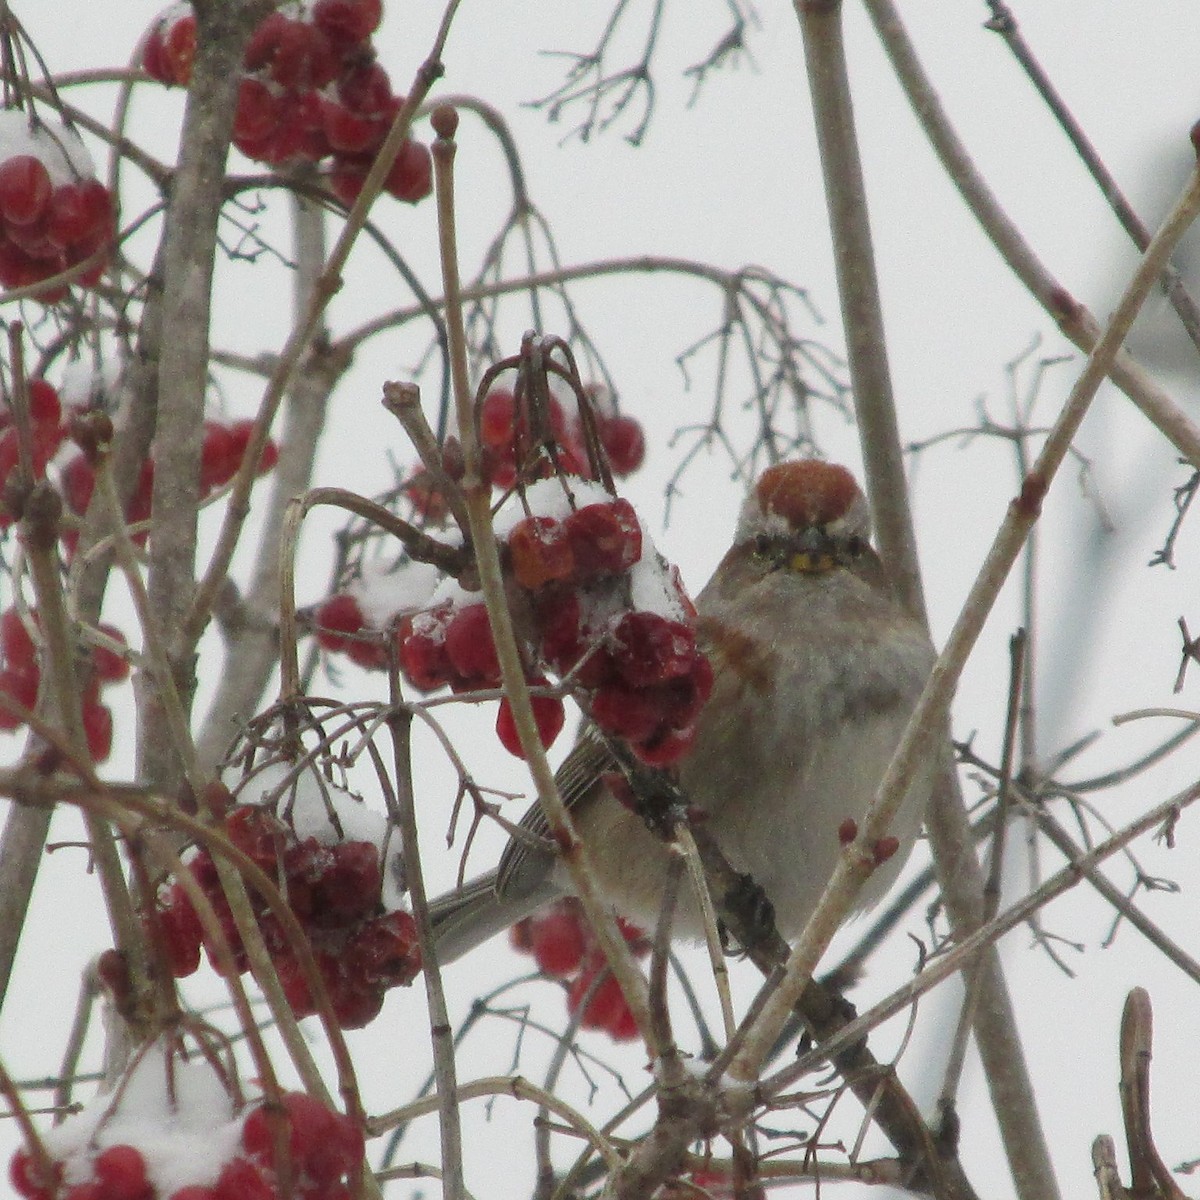 American Tree Sparrow - Da Eagle